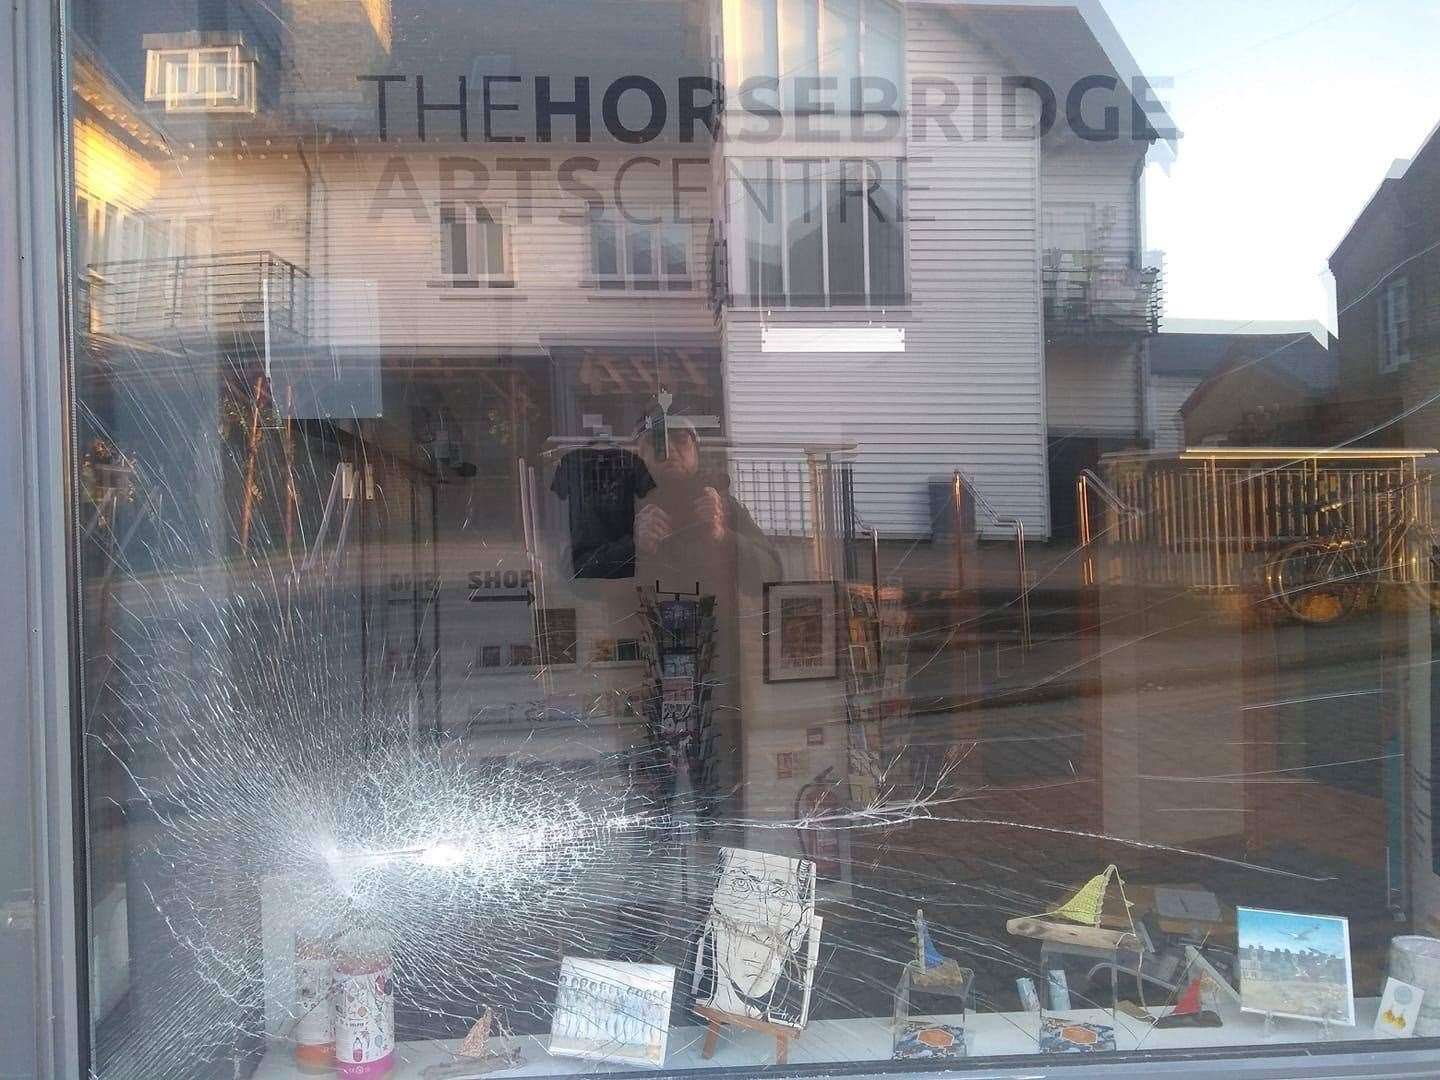 A window at The Horsebridge Arts Centre was smashed. Picture: The Horsebridge Arts Centre/Facebook